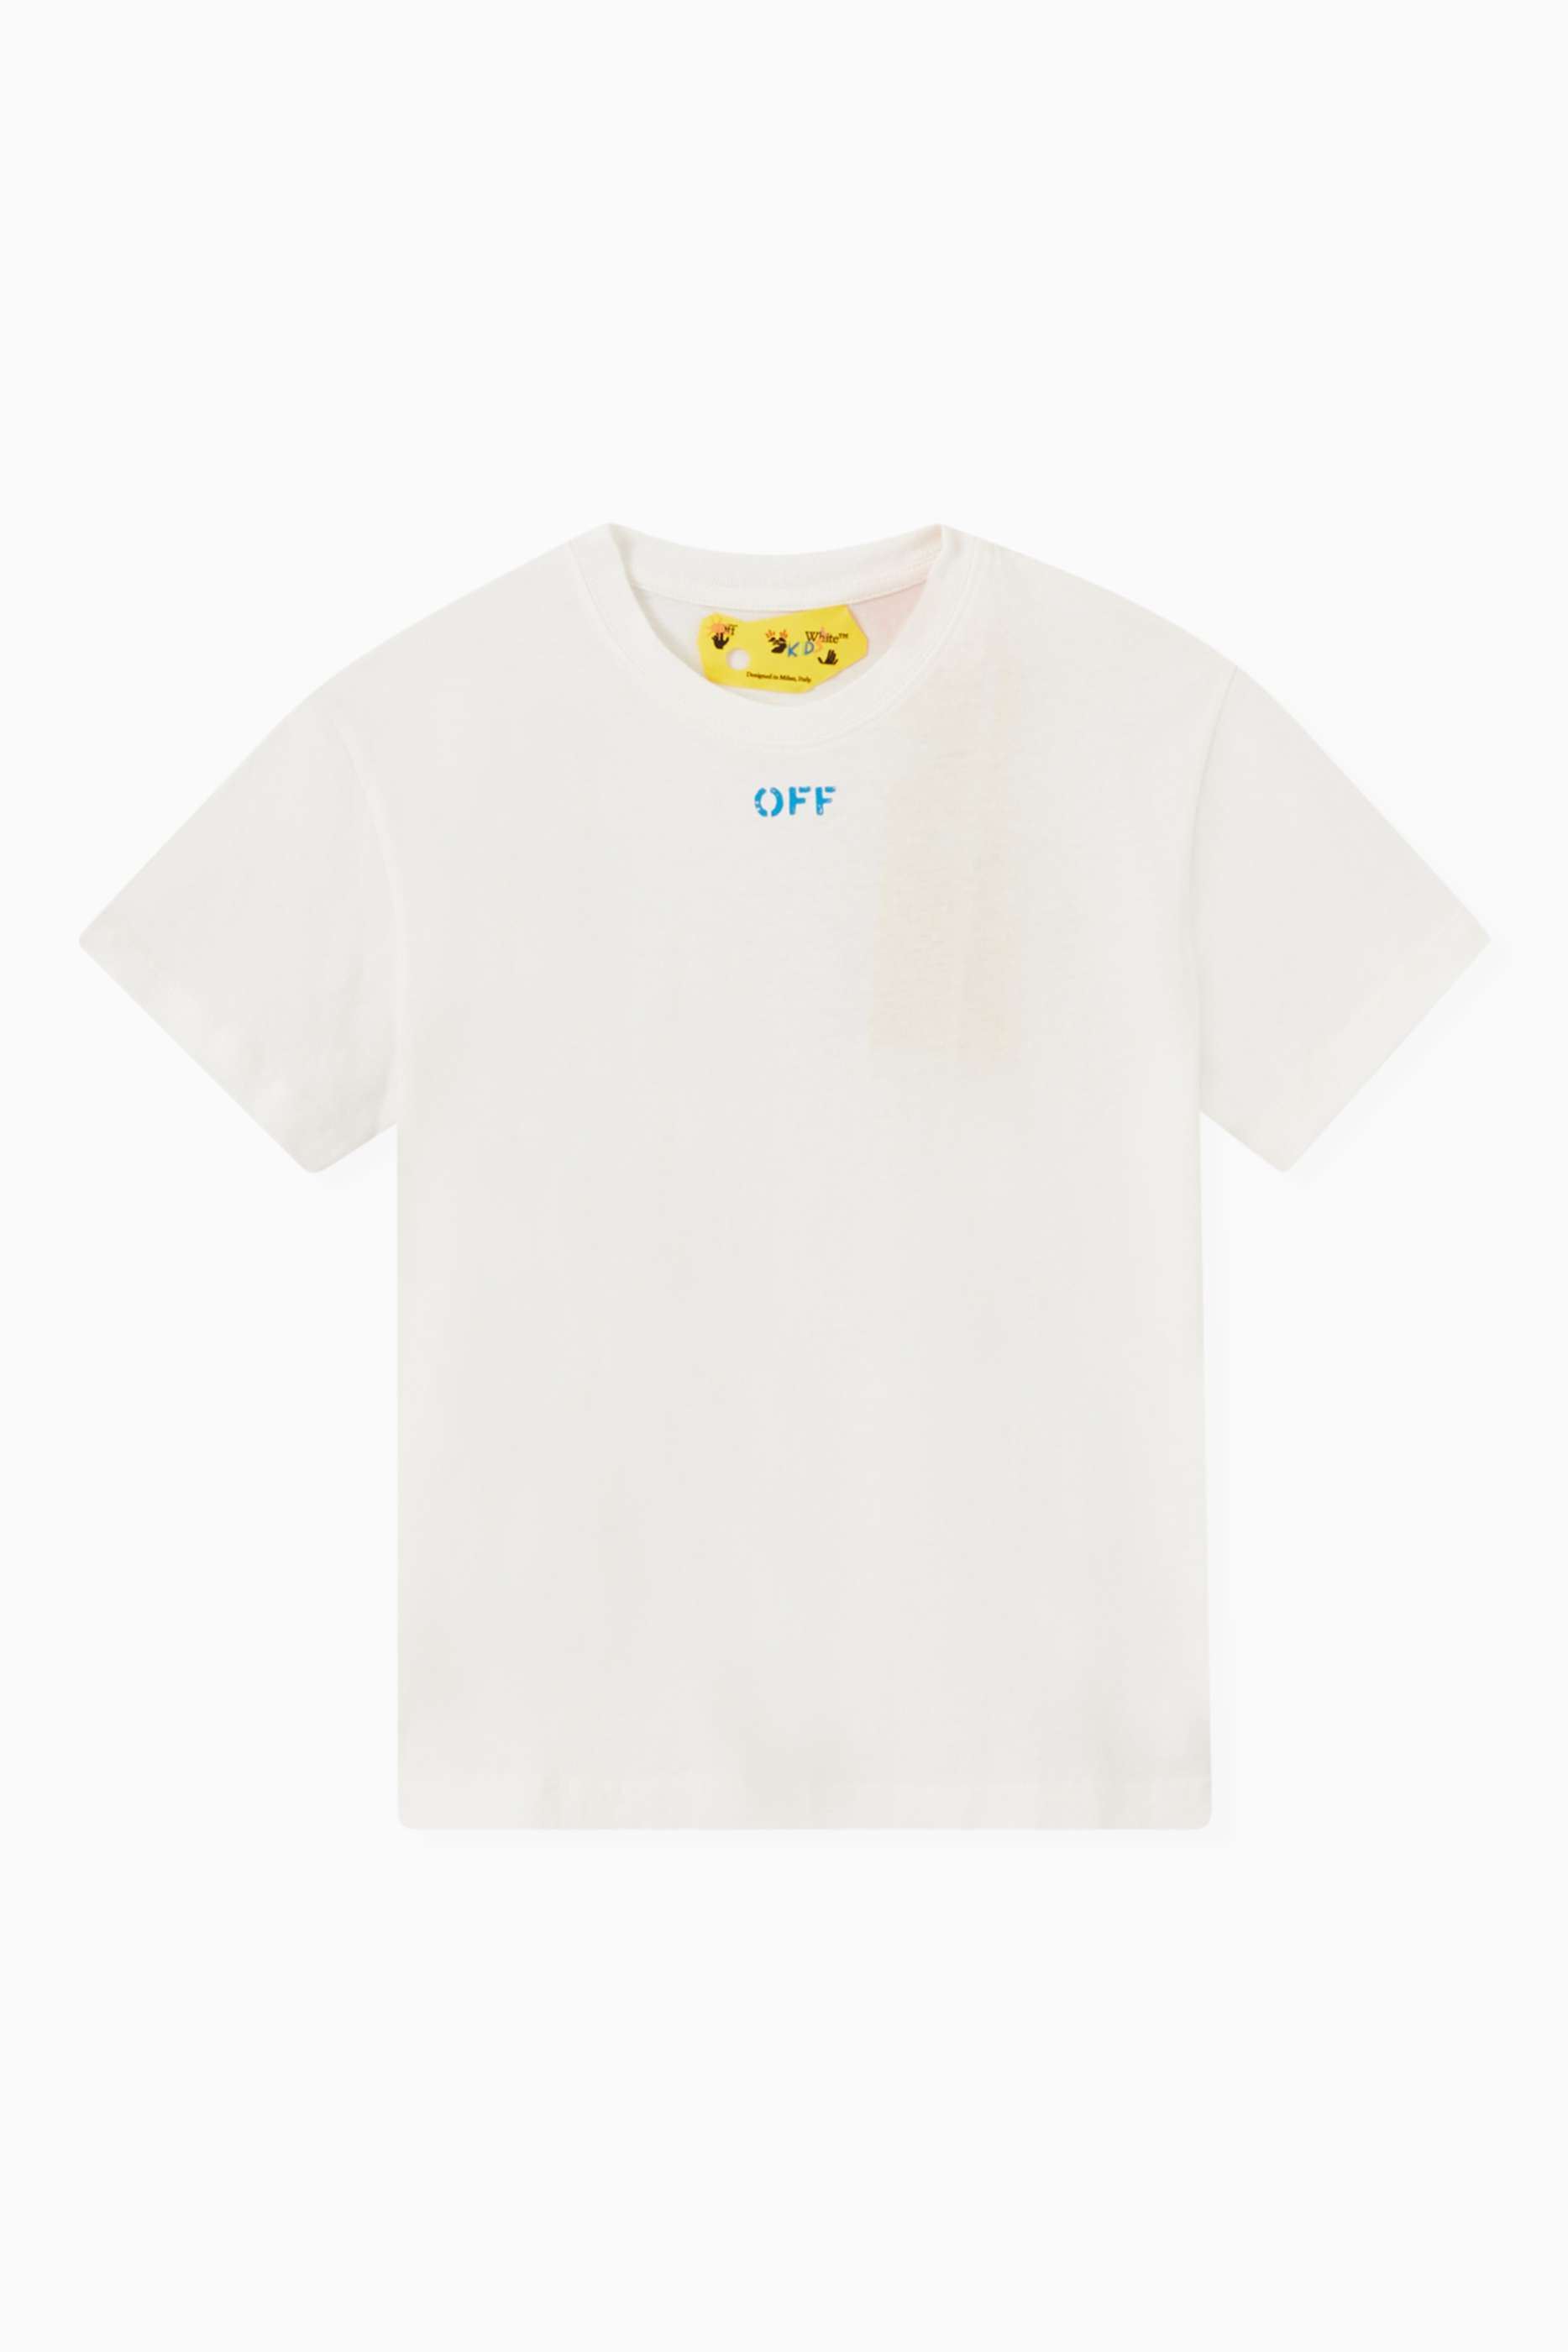 Shop Balmain Blue Logo T-Shirt in Cotton Jersey for Kids | Ounass UAE